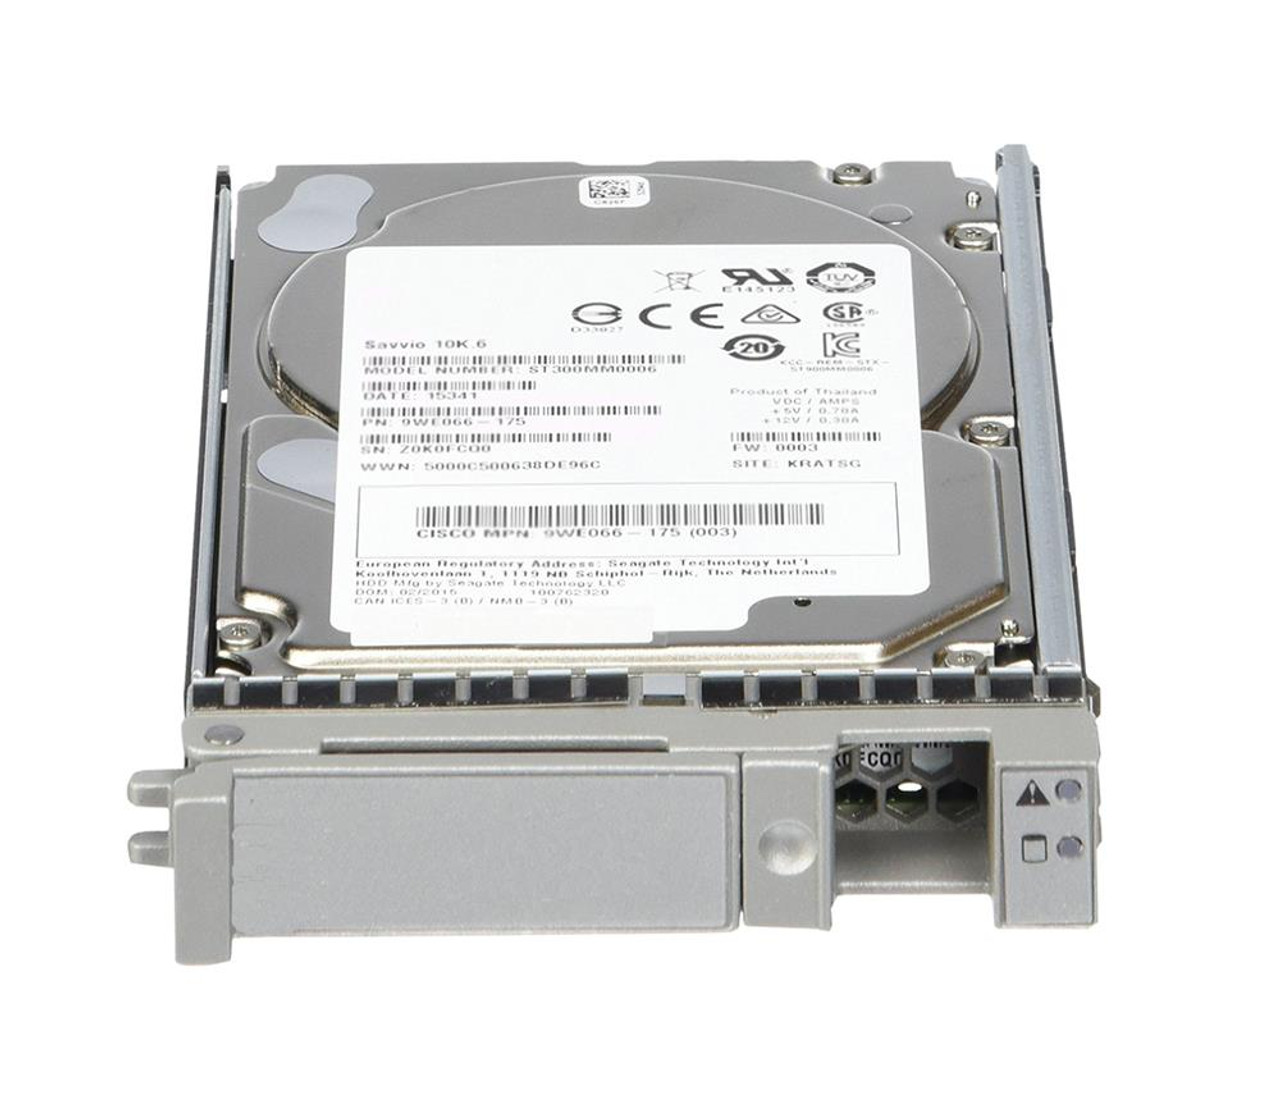 UCS-SP-HD-600G-2 Cisco 600GB 10000RPM SAS 12Gbps 2.5-inch Internal Hard Drive (2-Pack)